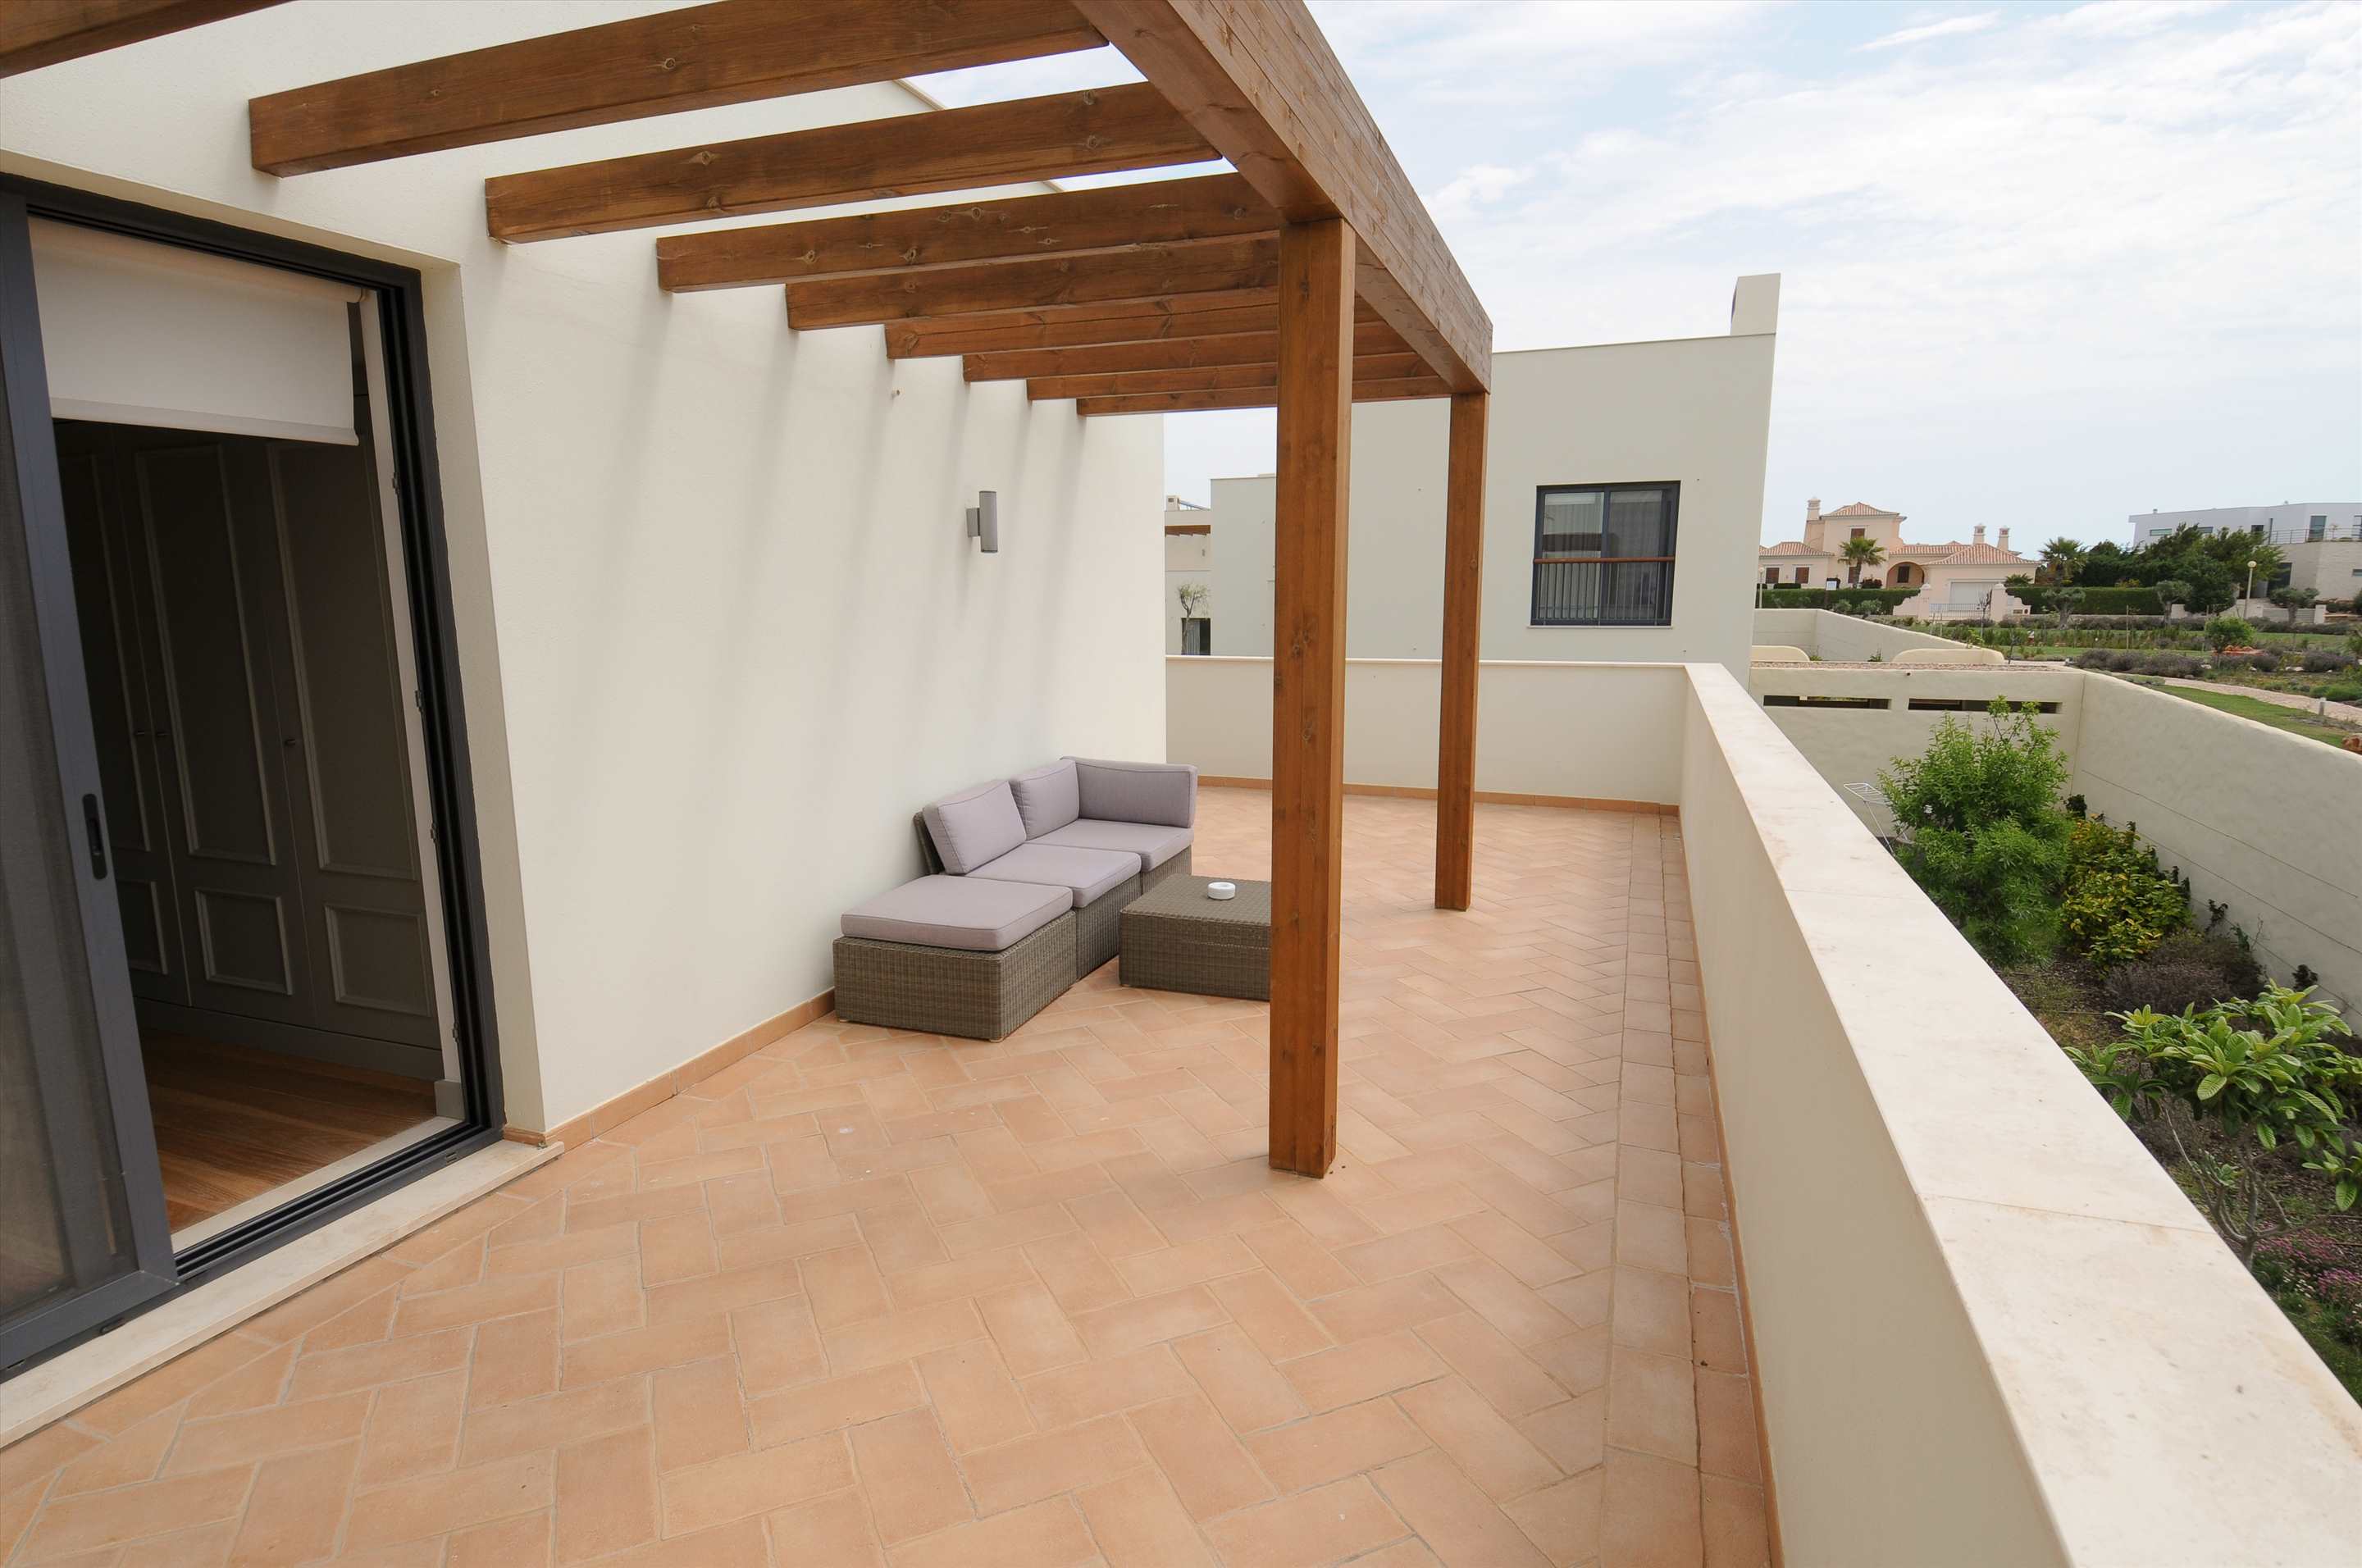 Martinhal Village Garden House, One Bedroom Apartment, 1 bedroom villa in Martinhal Sagres, Algarve Photo #19